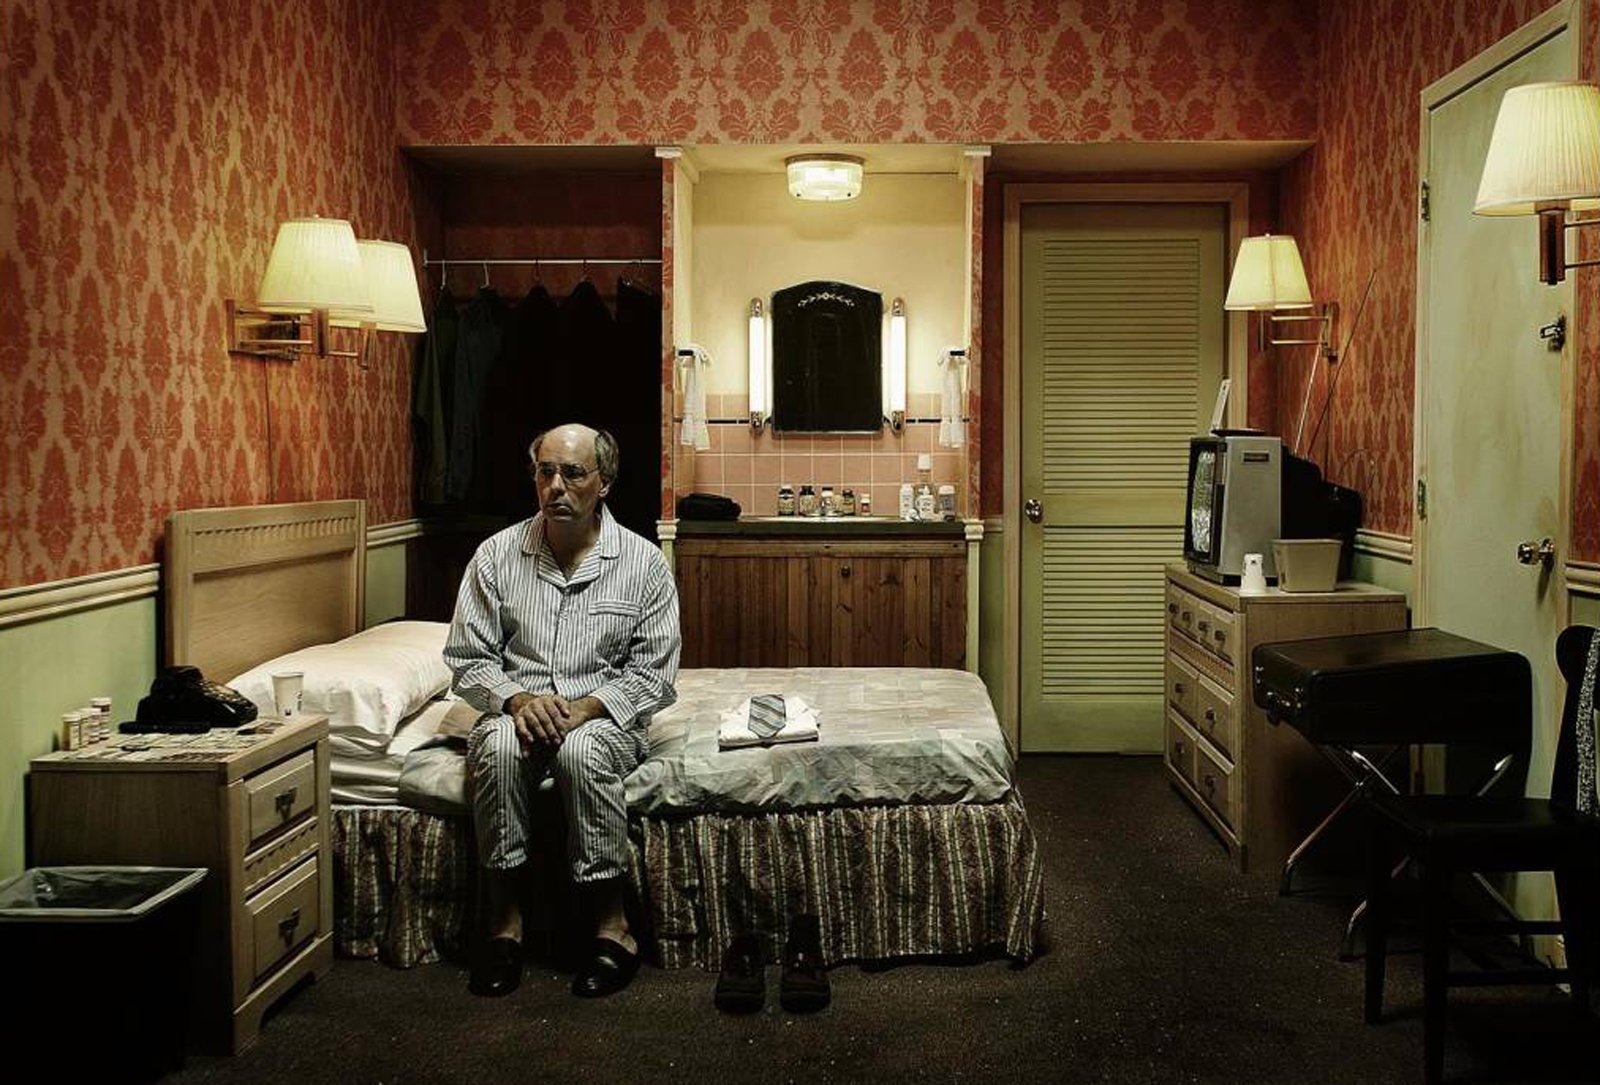 Комната пенсионера. Комната пожилого человека. Комната старика. Спальня для пожилого. Спальня для пожилых людей.